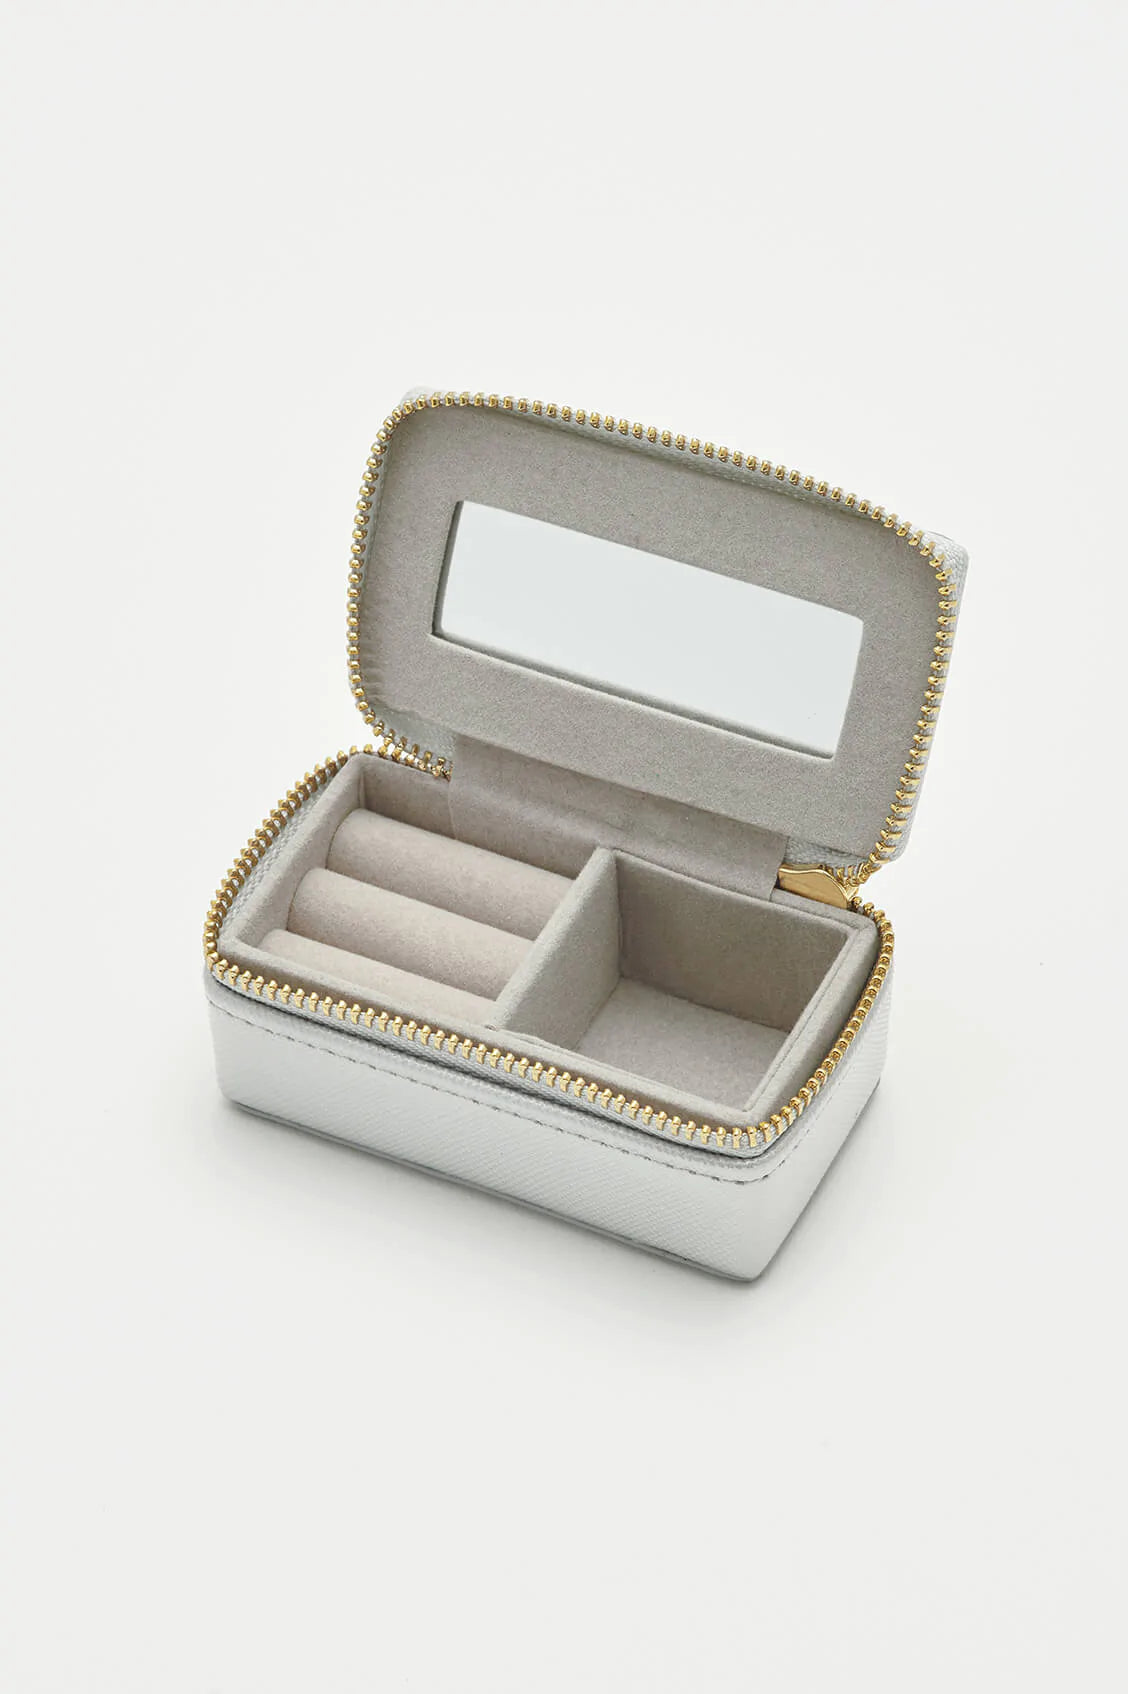 Tiny Jewelry Box - Iridescent